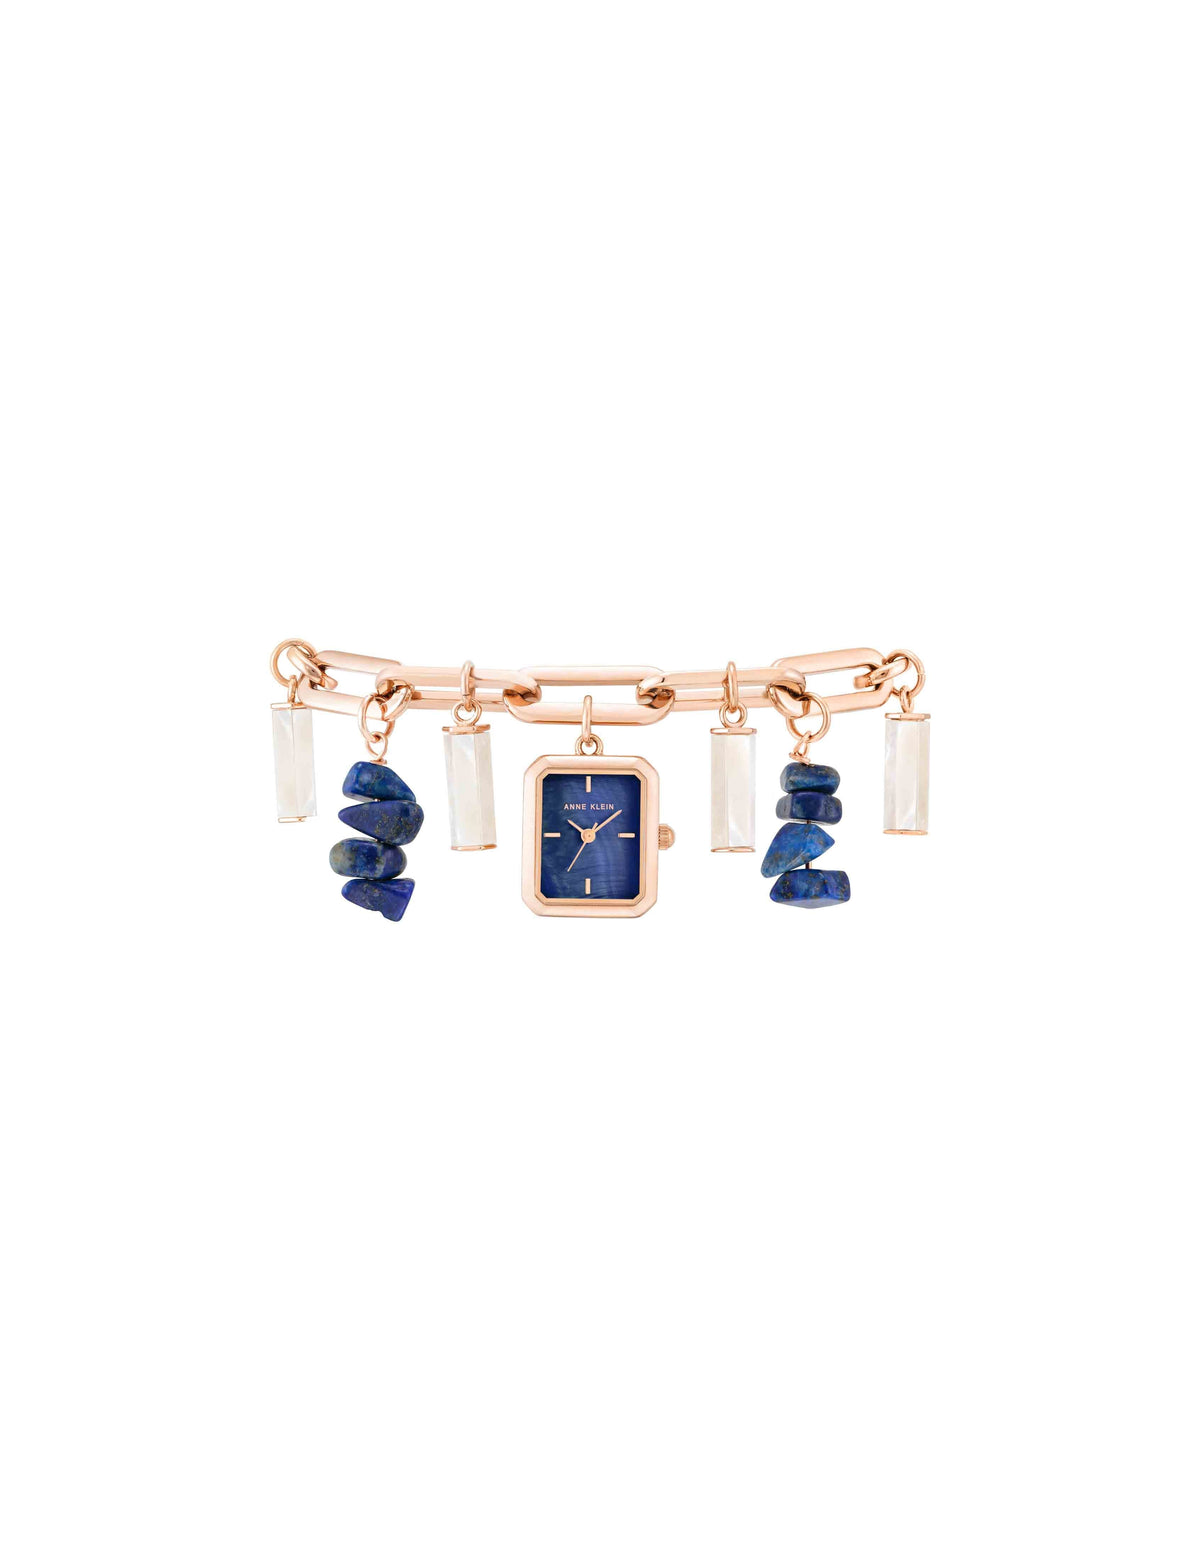 Anne Klein Rose Gold-Tone/Blue Lapis Gemstone Charm Bracelet Watch